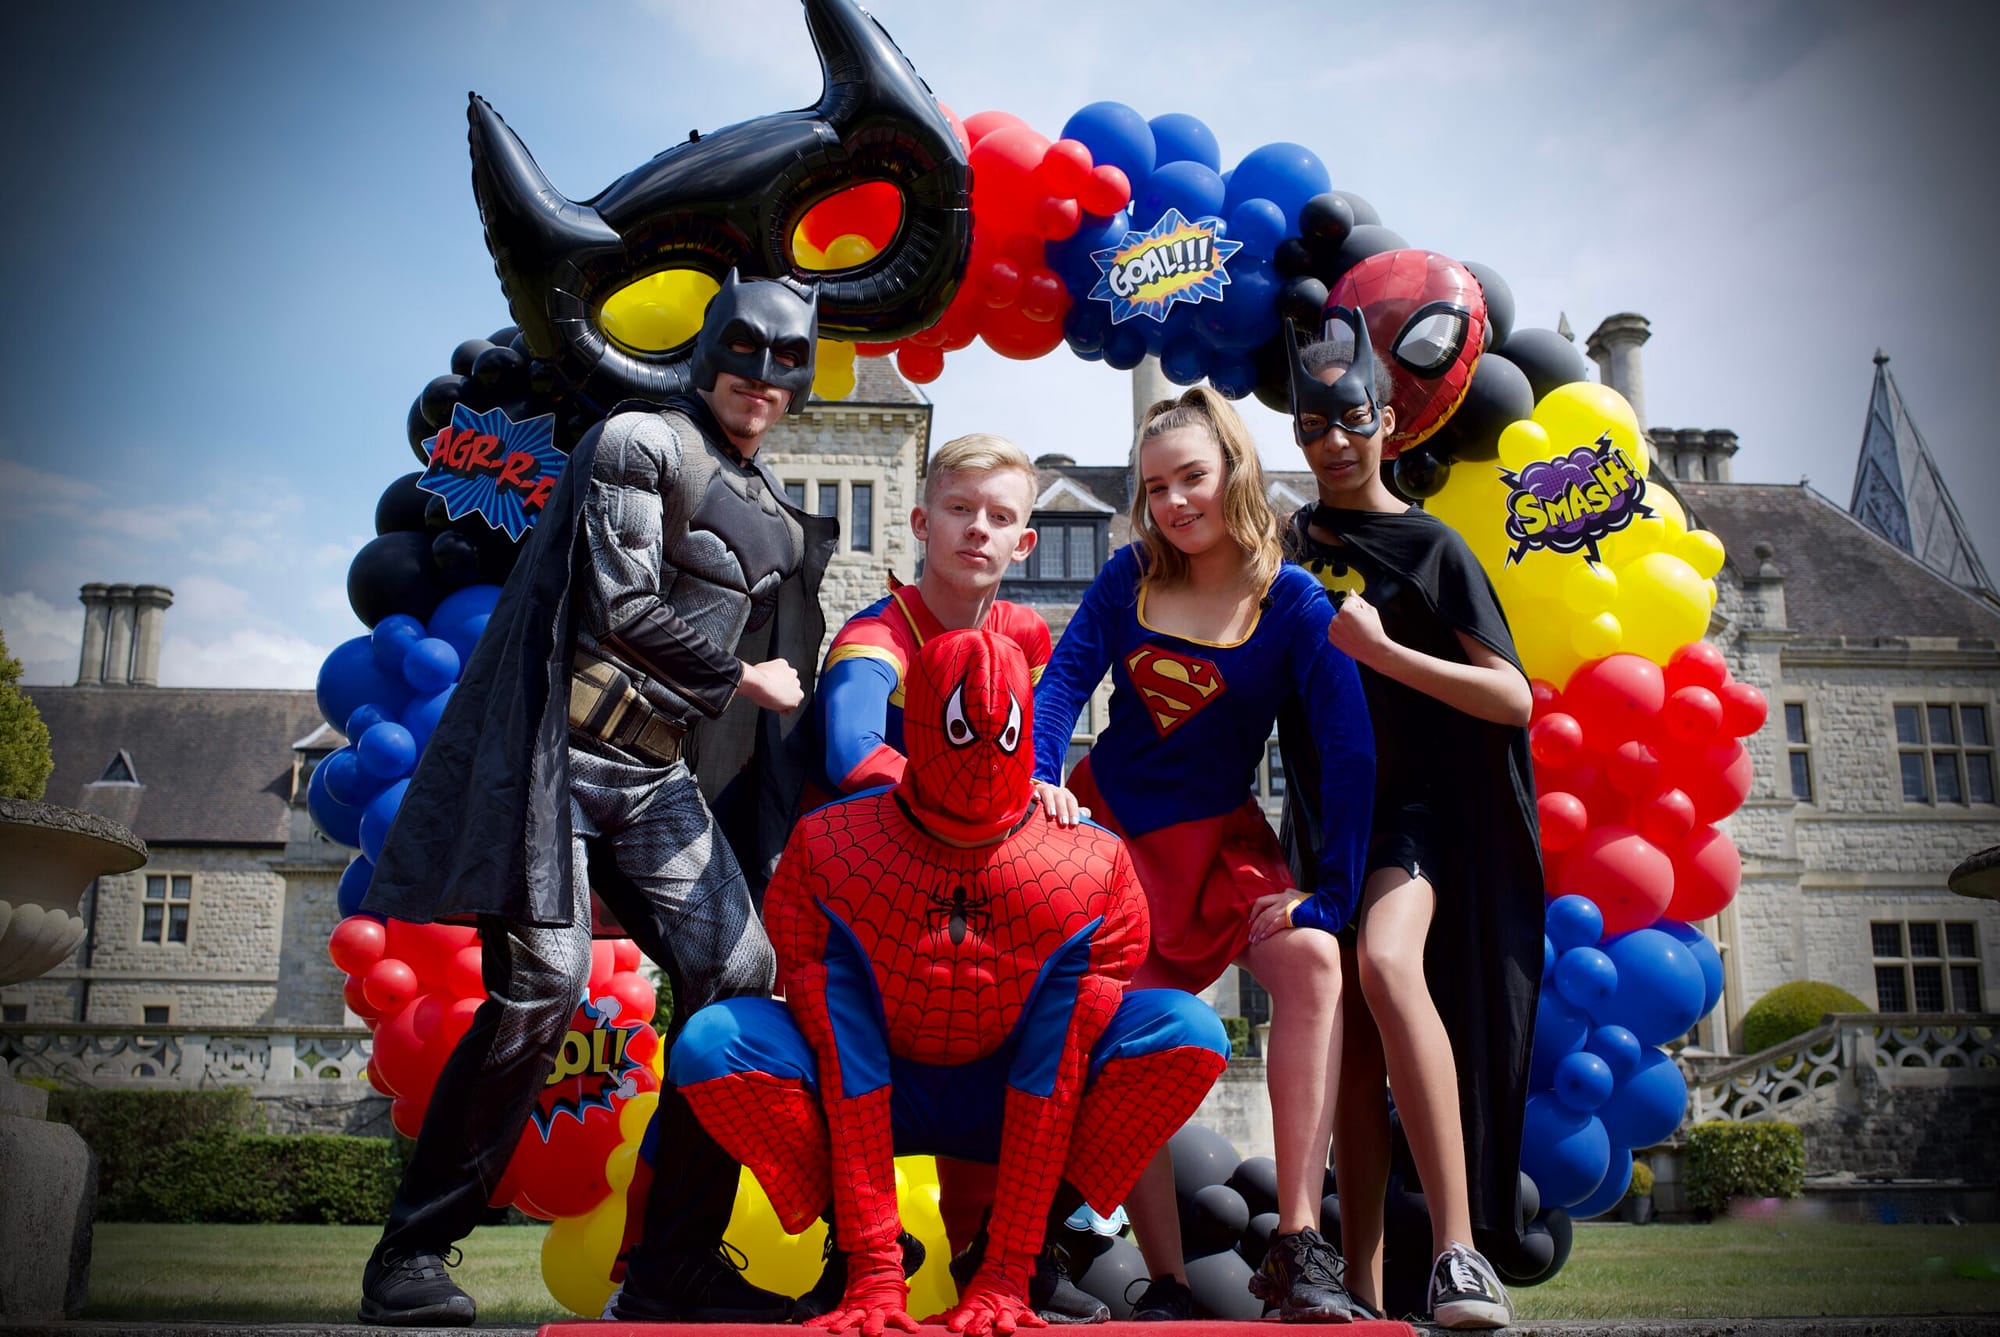 Superhero themed birthday balloons and character dress up